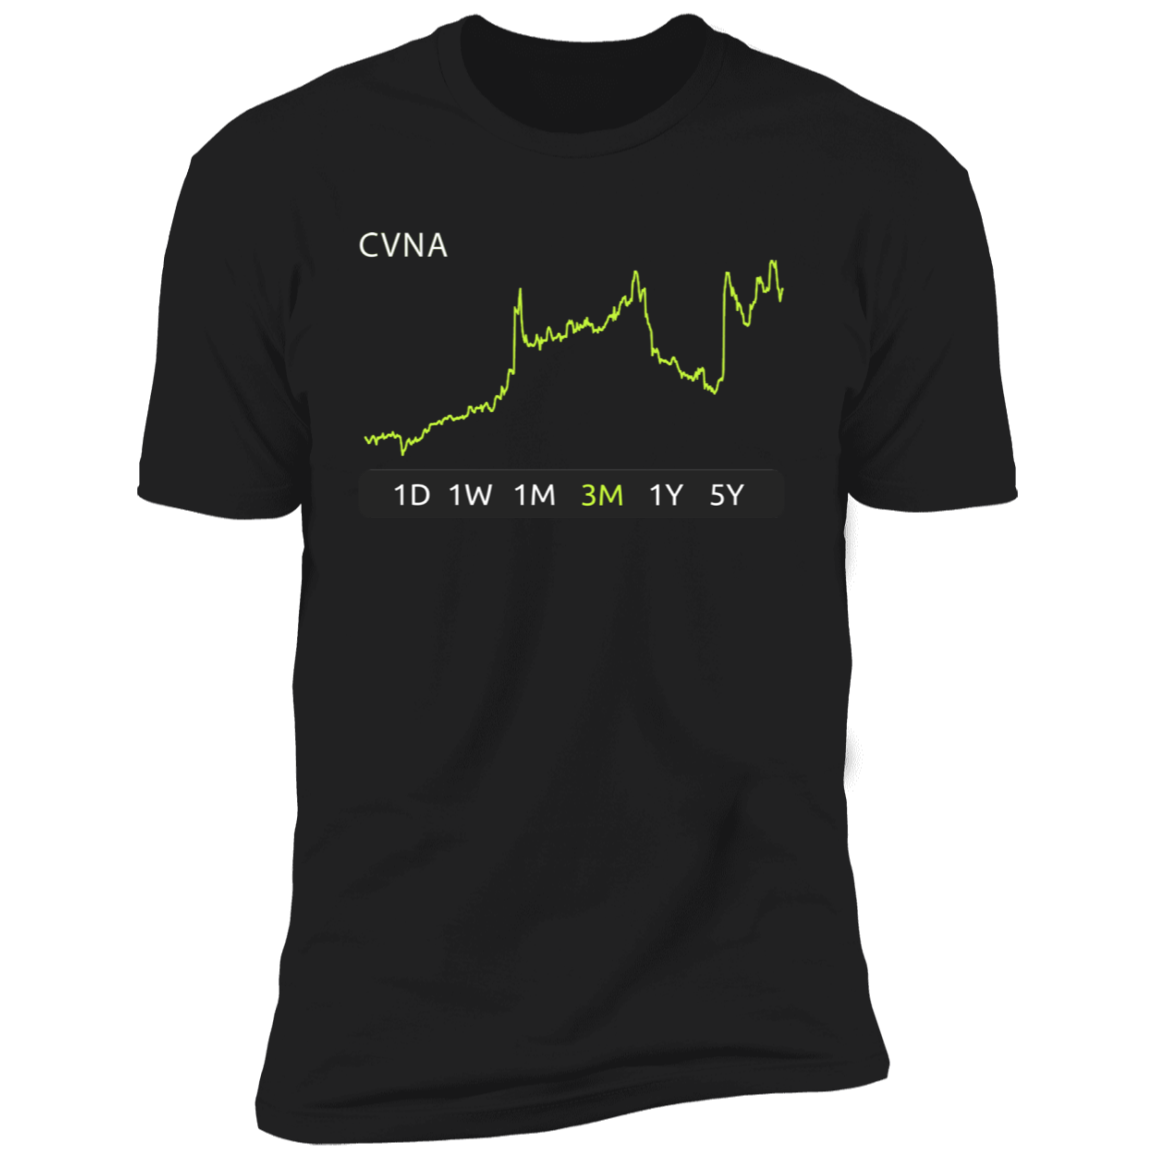 CVNA Stock 3m Premium T-Shirt